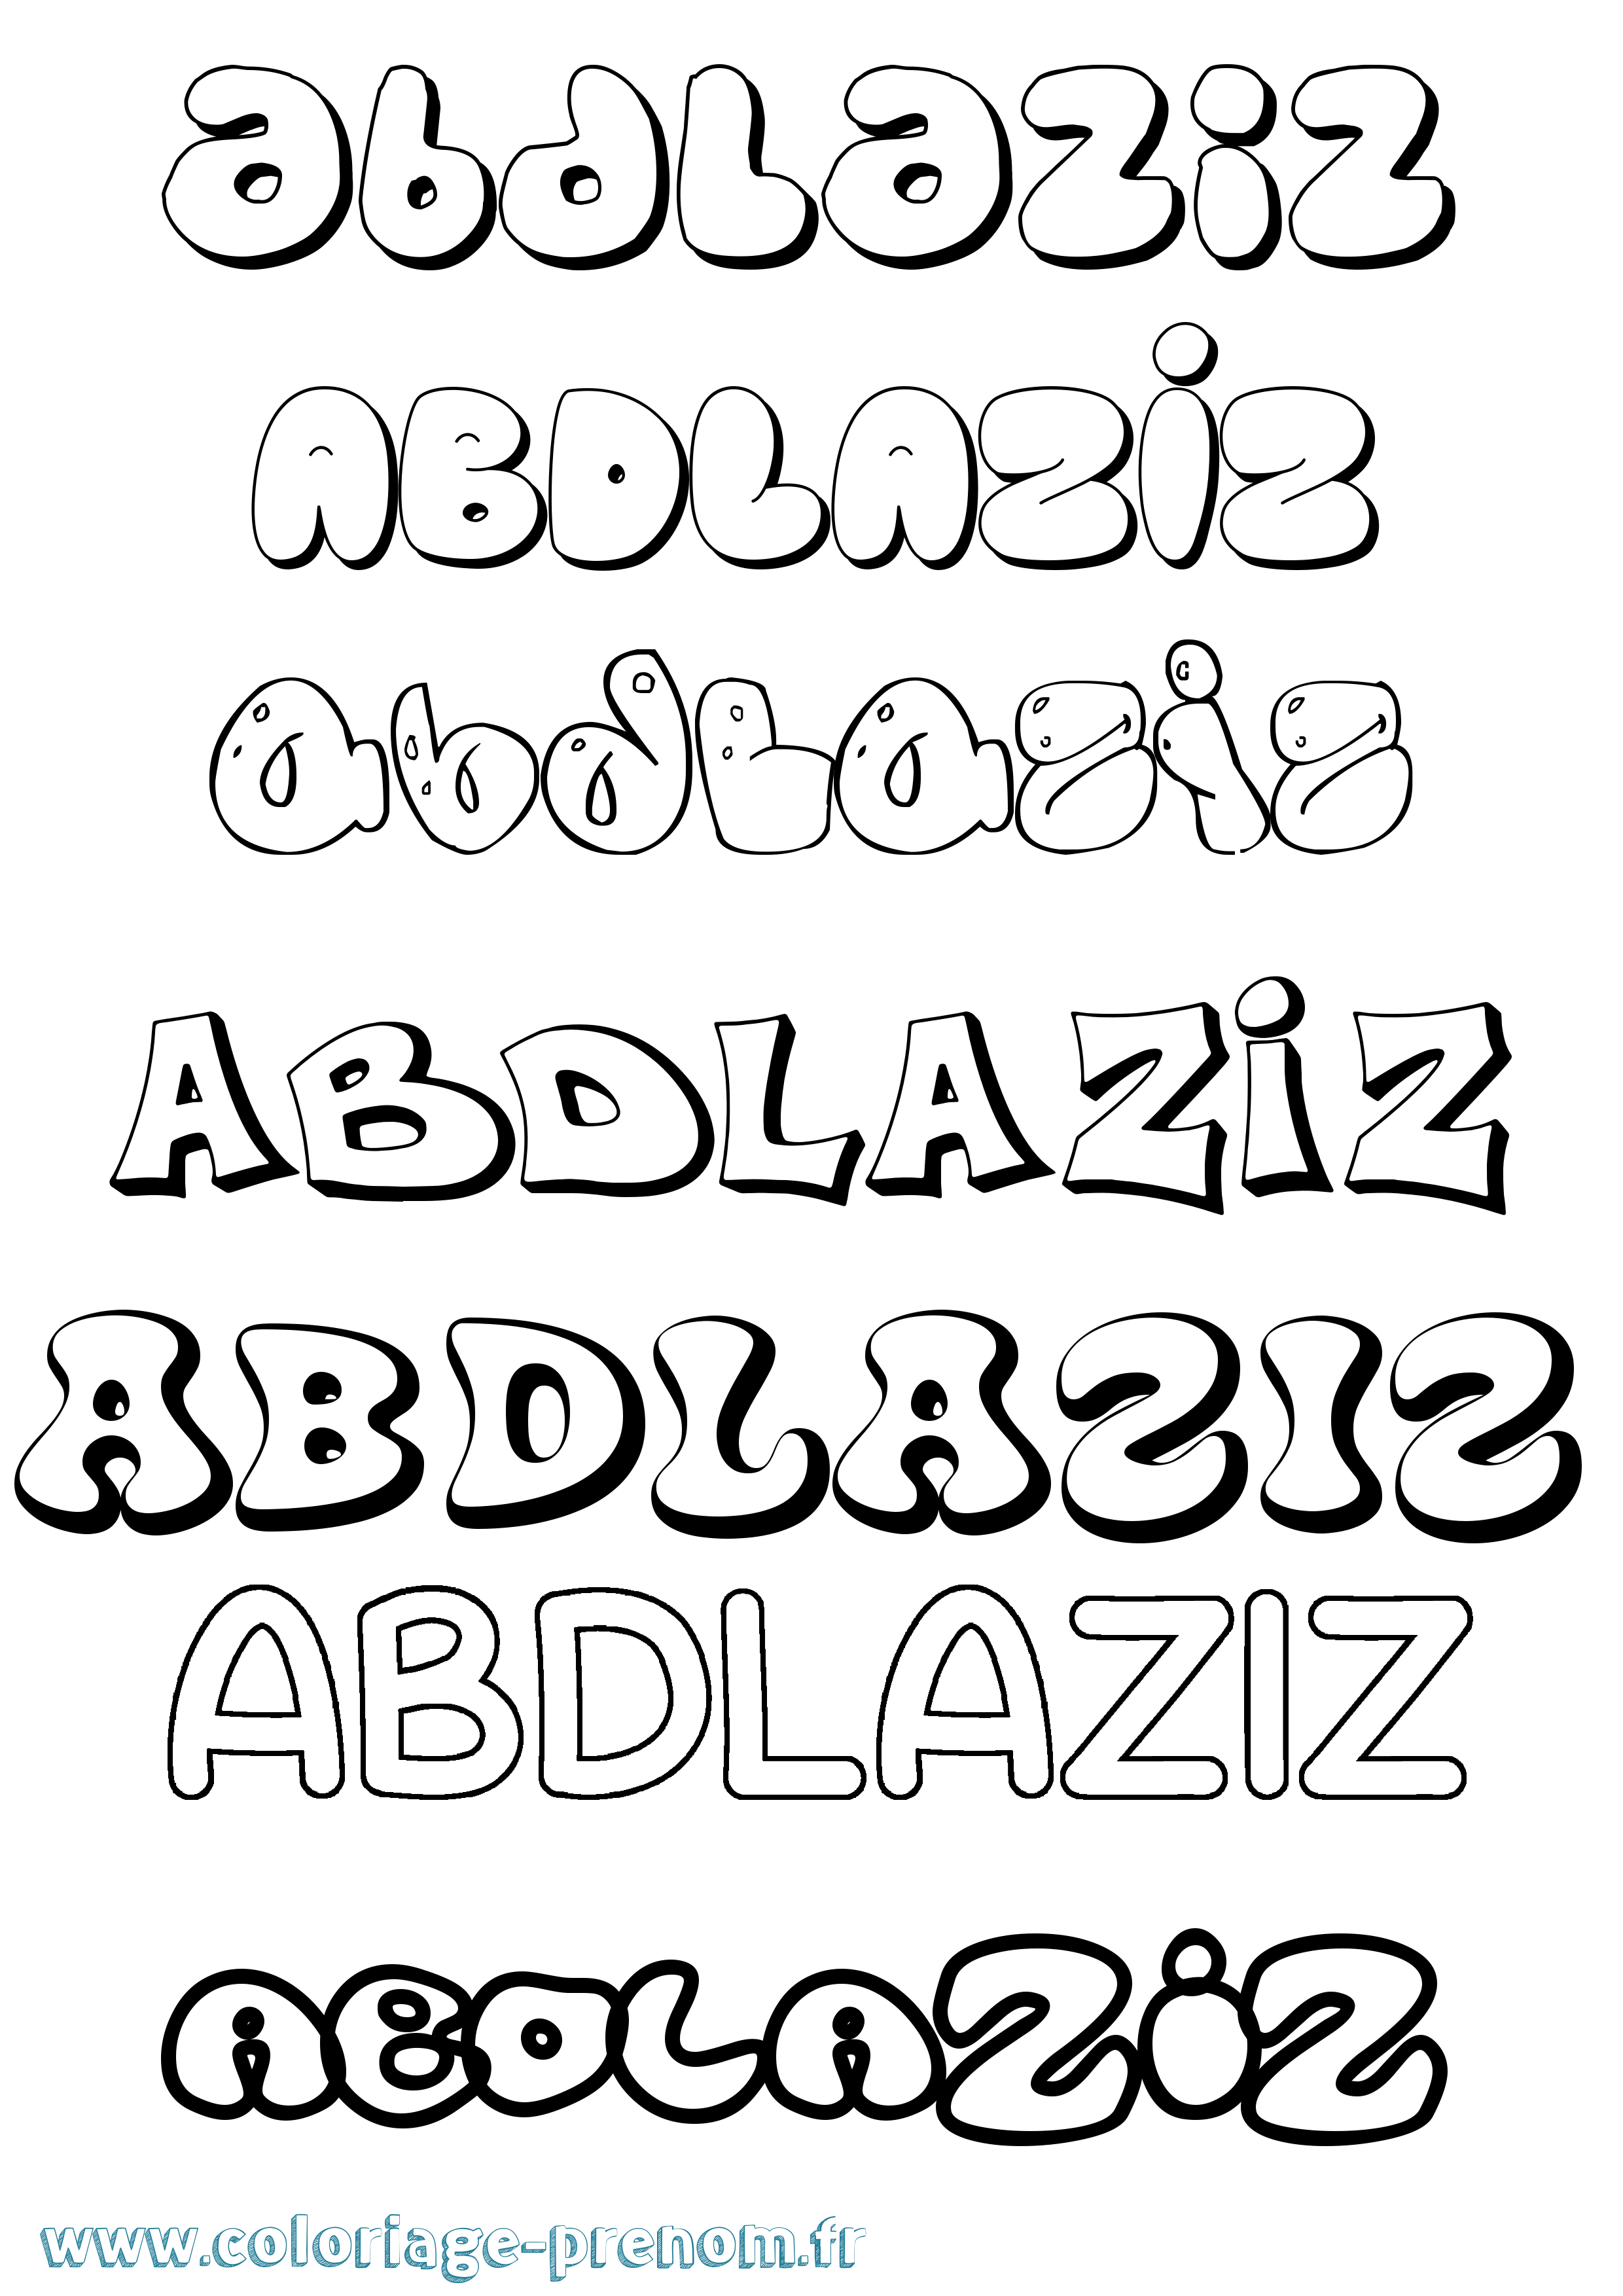 Coloriage prénom Abdlaziz Bubble